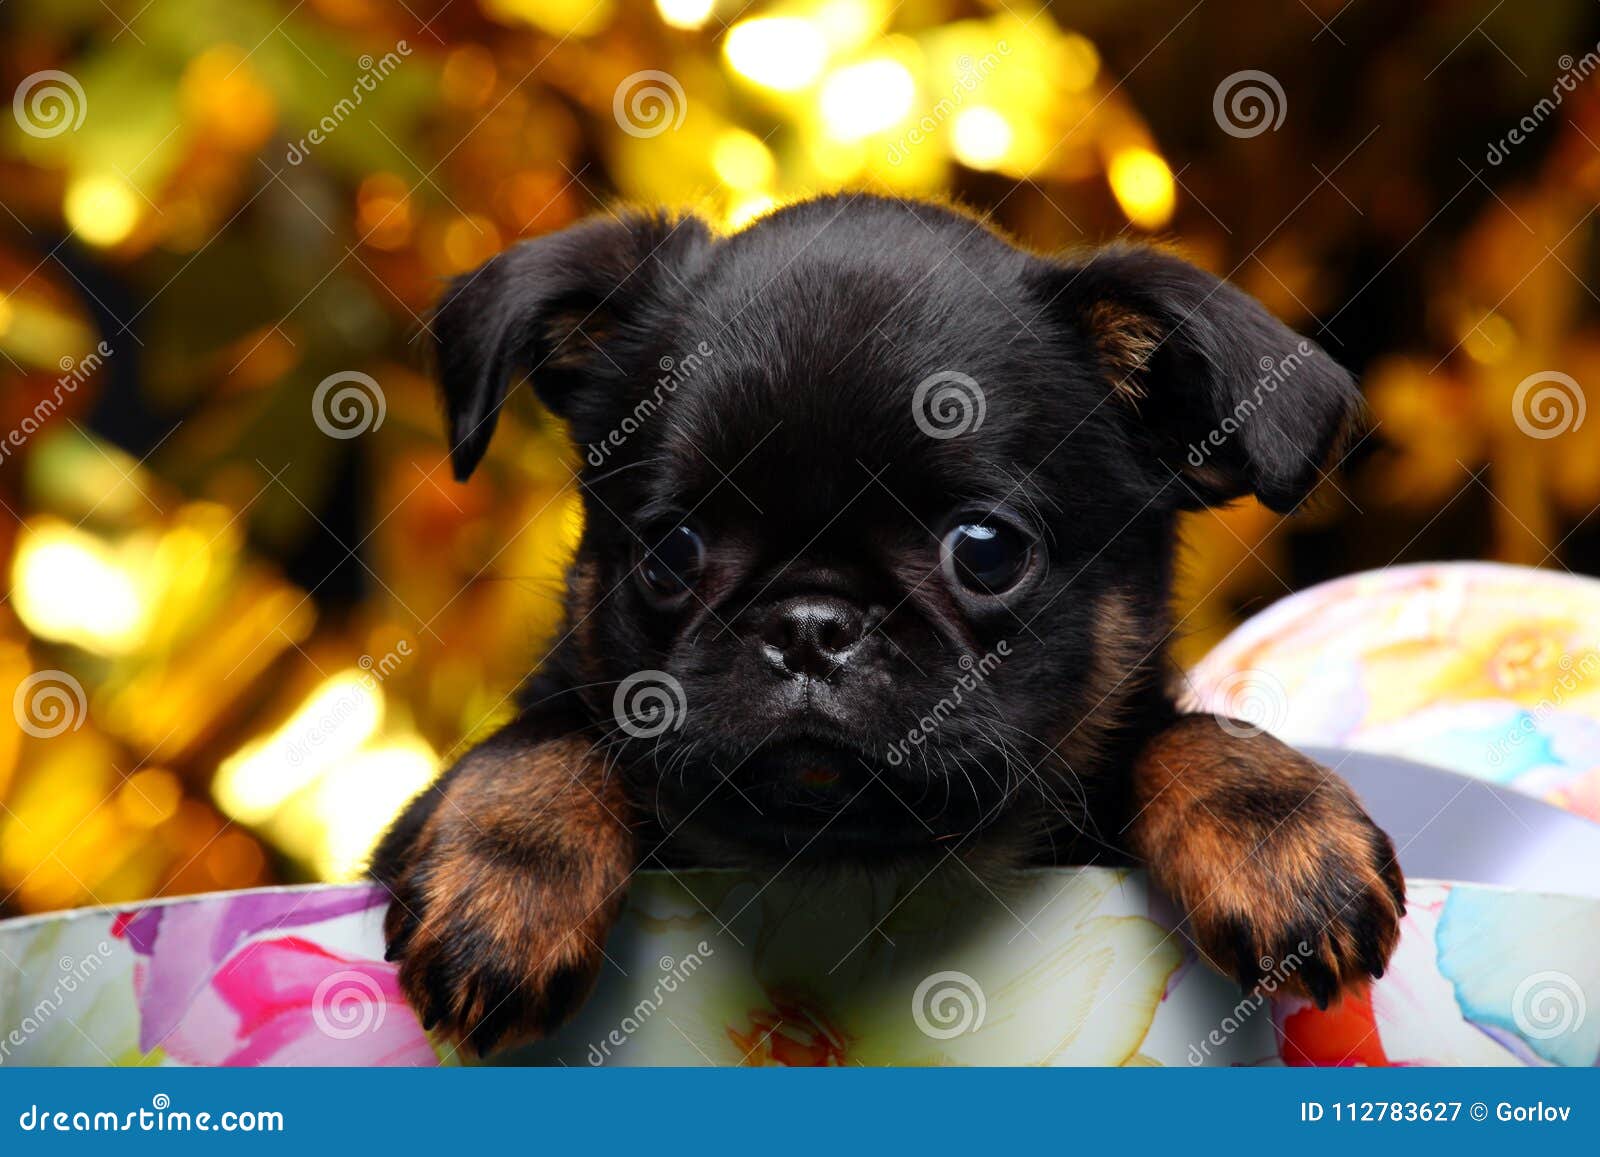 baby griffon dog